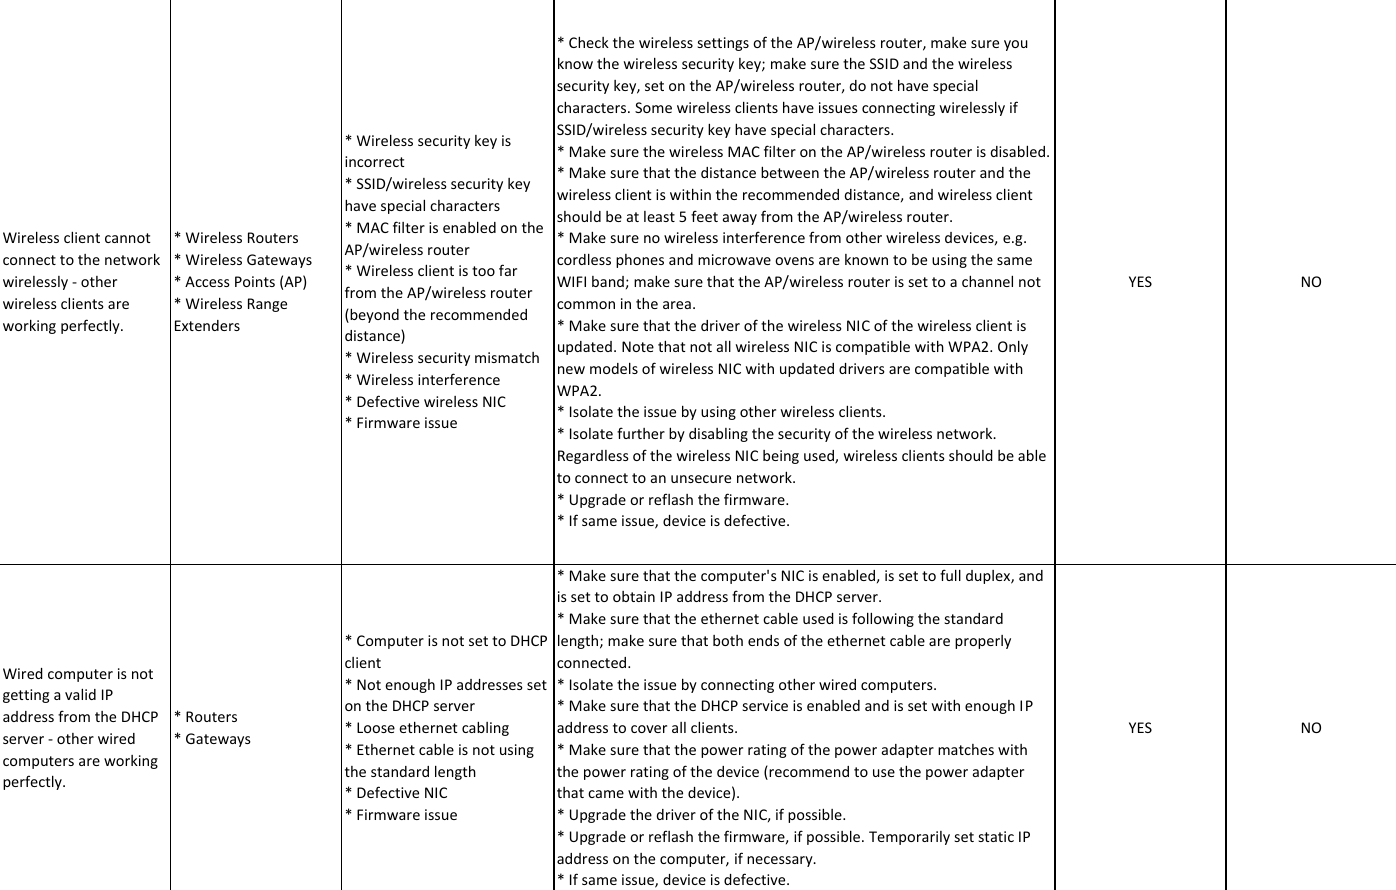 Page 4 of 11 - LInksys RMA Checklistx  22. L1 Checklist